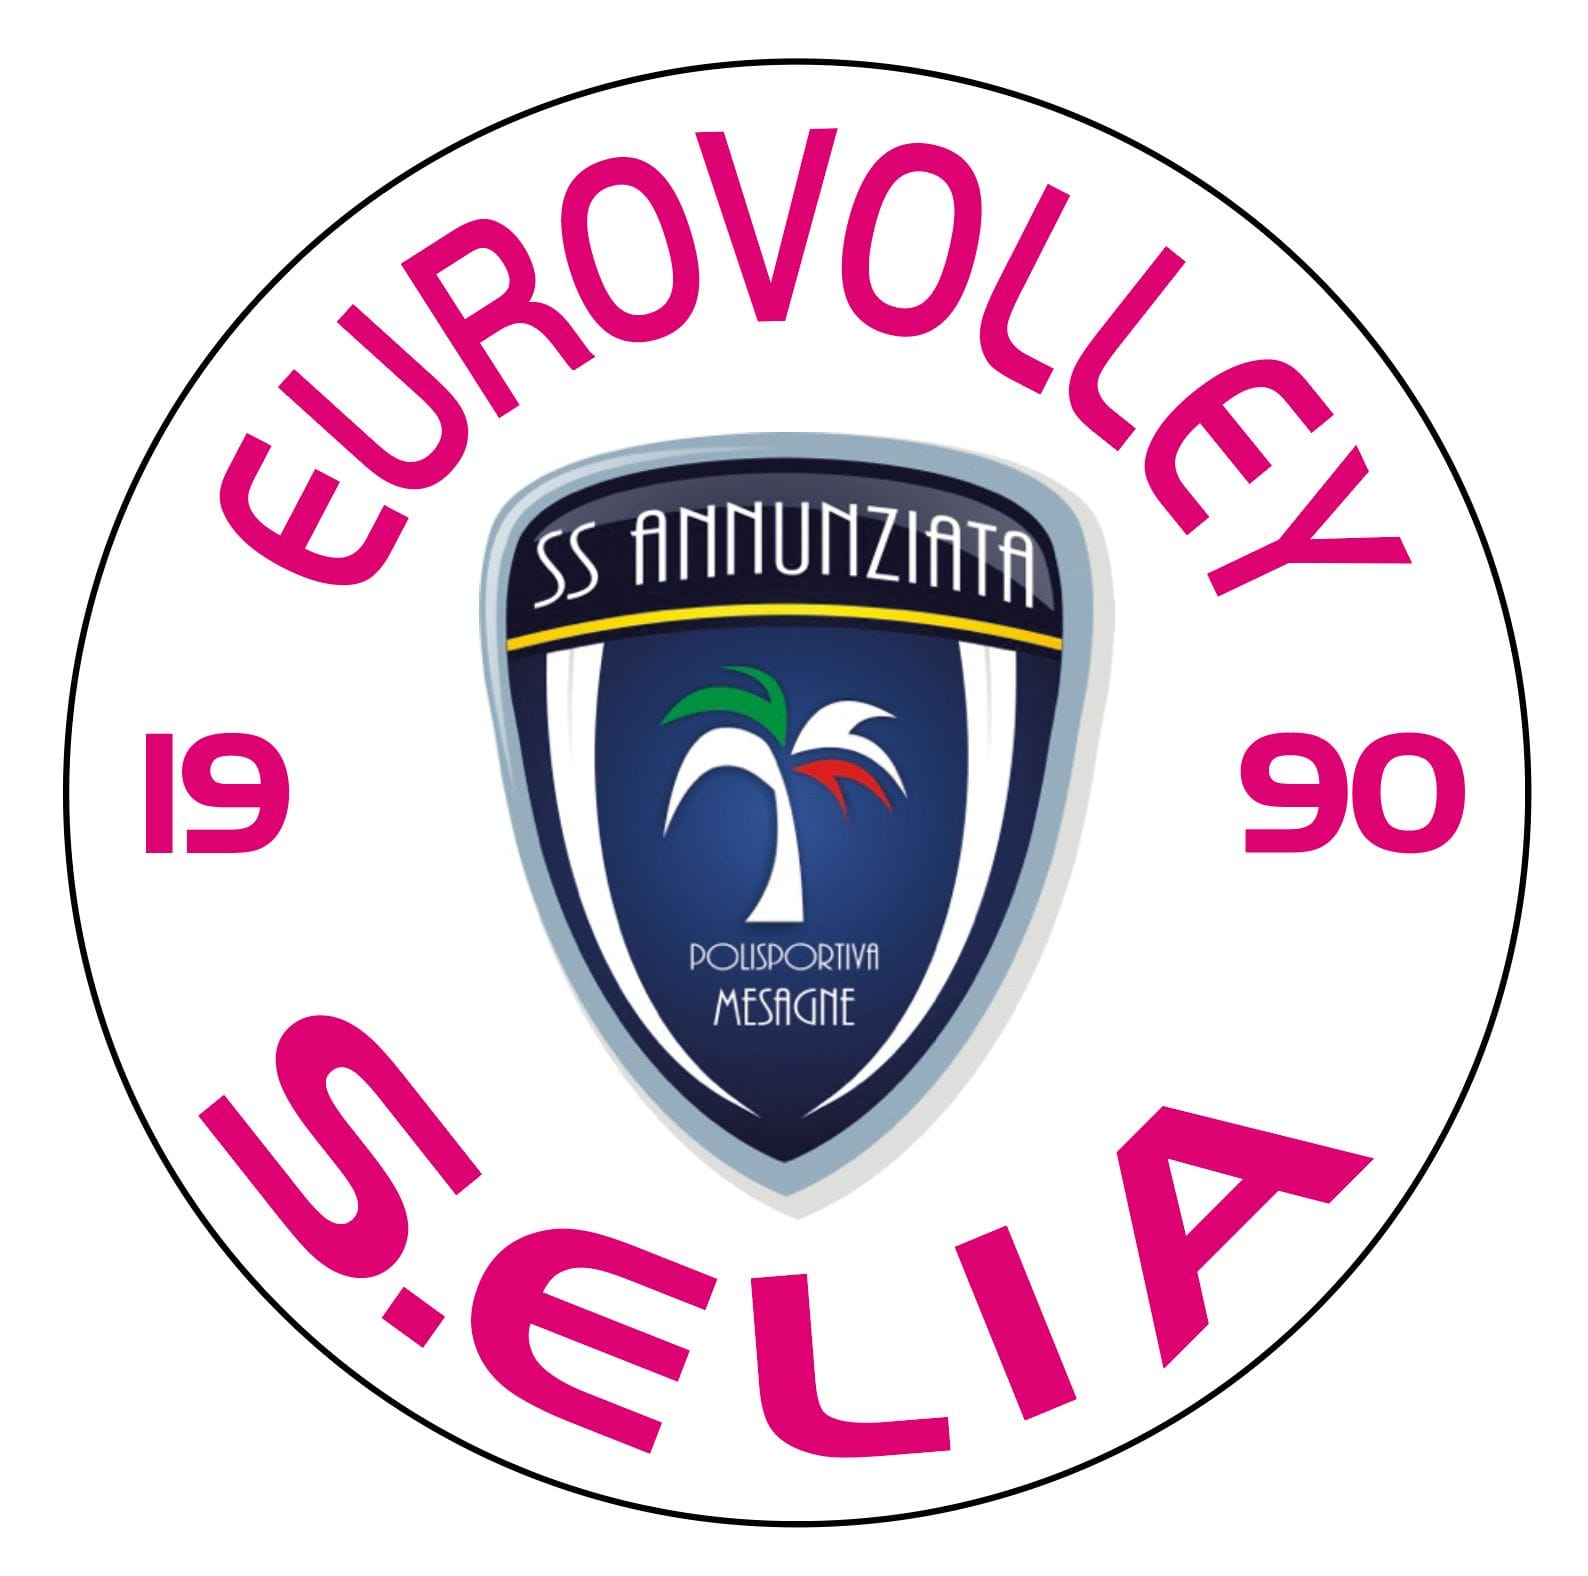 eurovolley_ssannunziata_logo.jpg